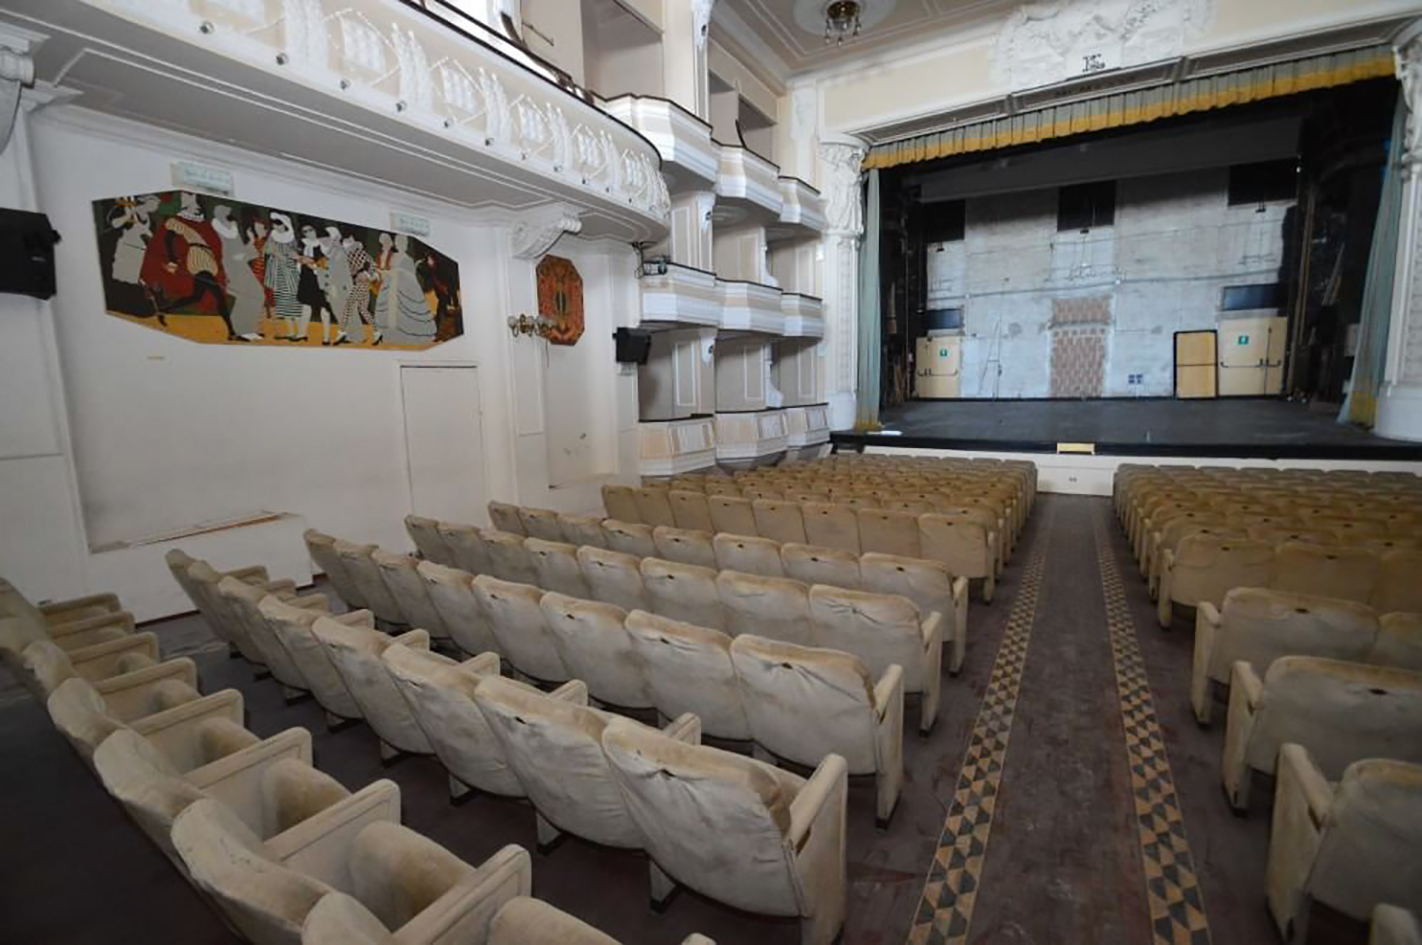 Teatro Kursaal Santa Lucia (teatro) - Bari (BA) 